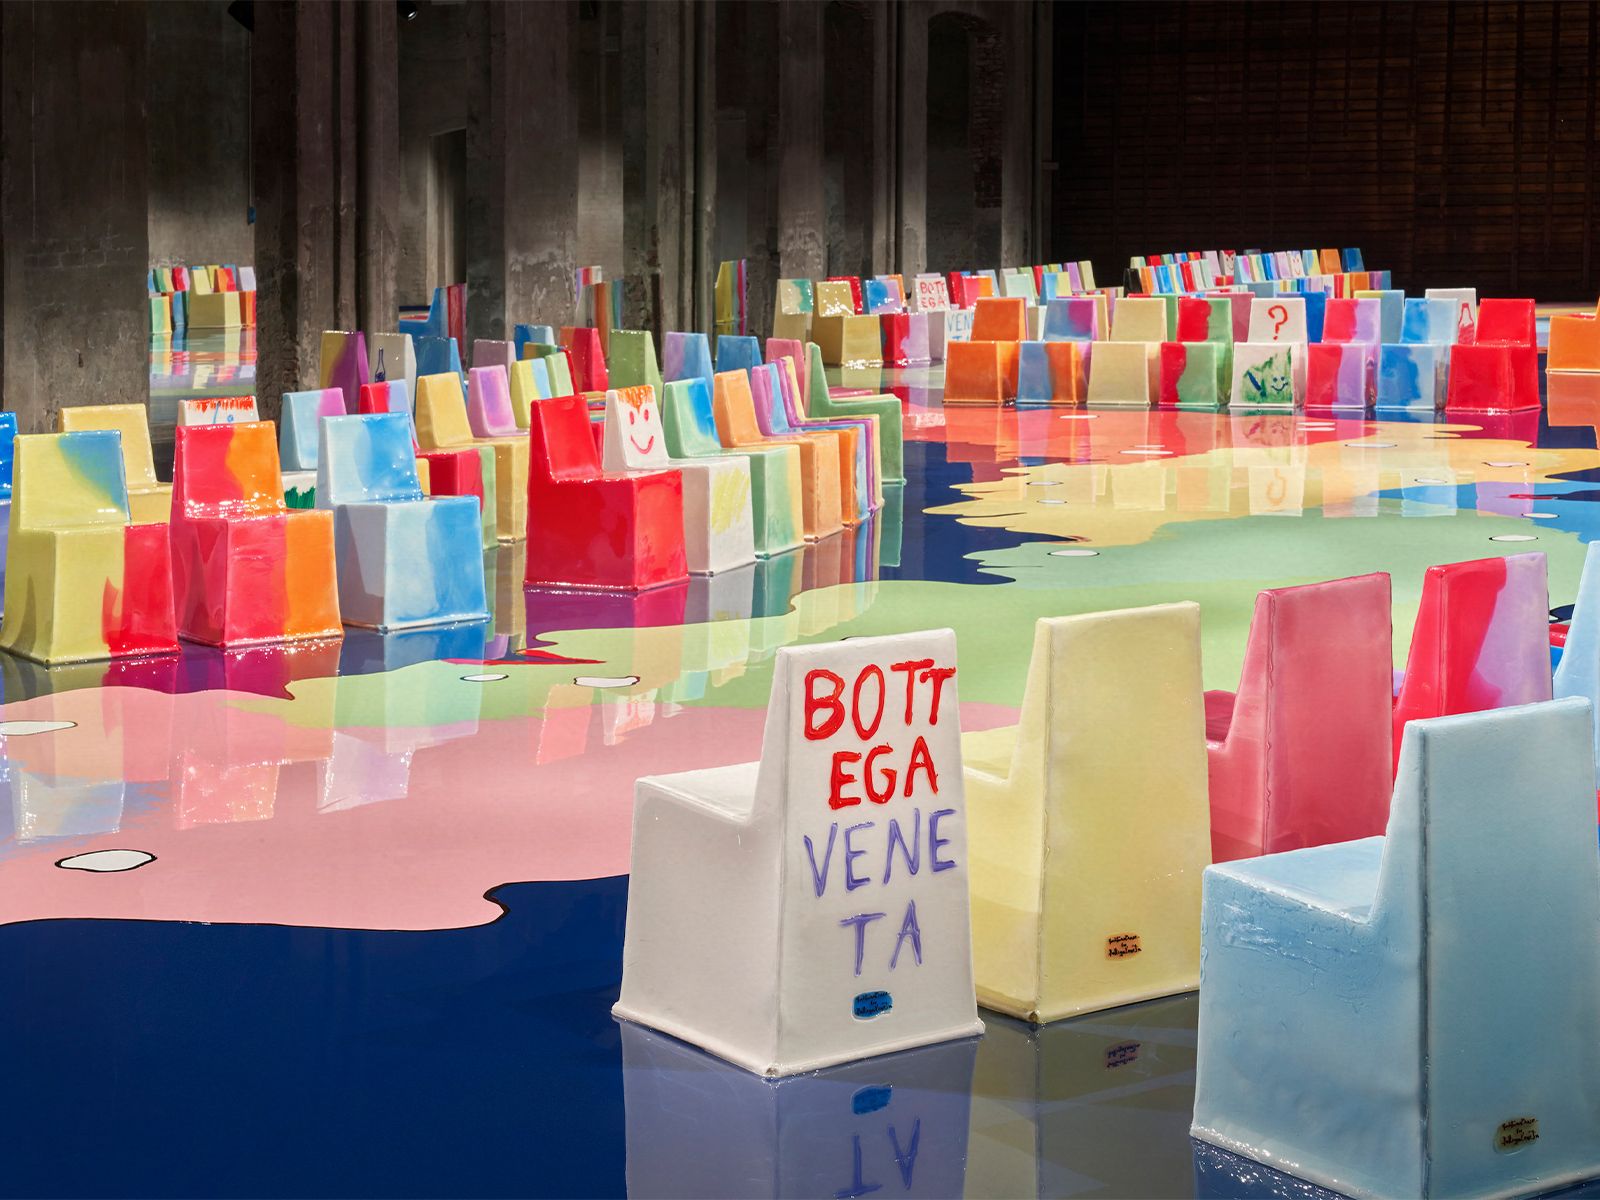 Bottega Veneta lands in Miami with an exclusive art installation